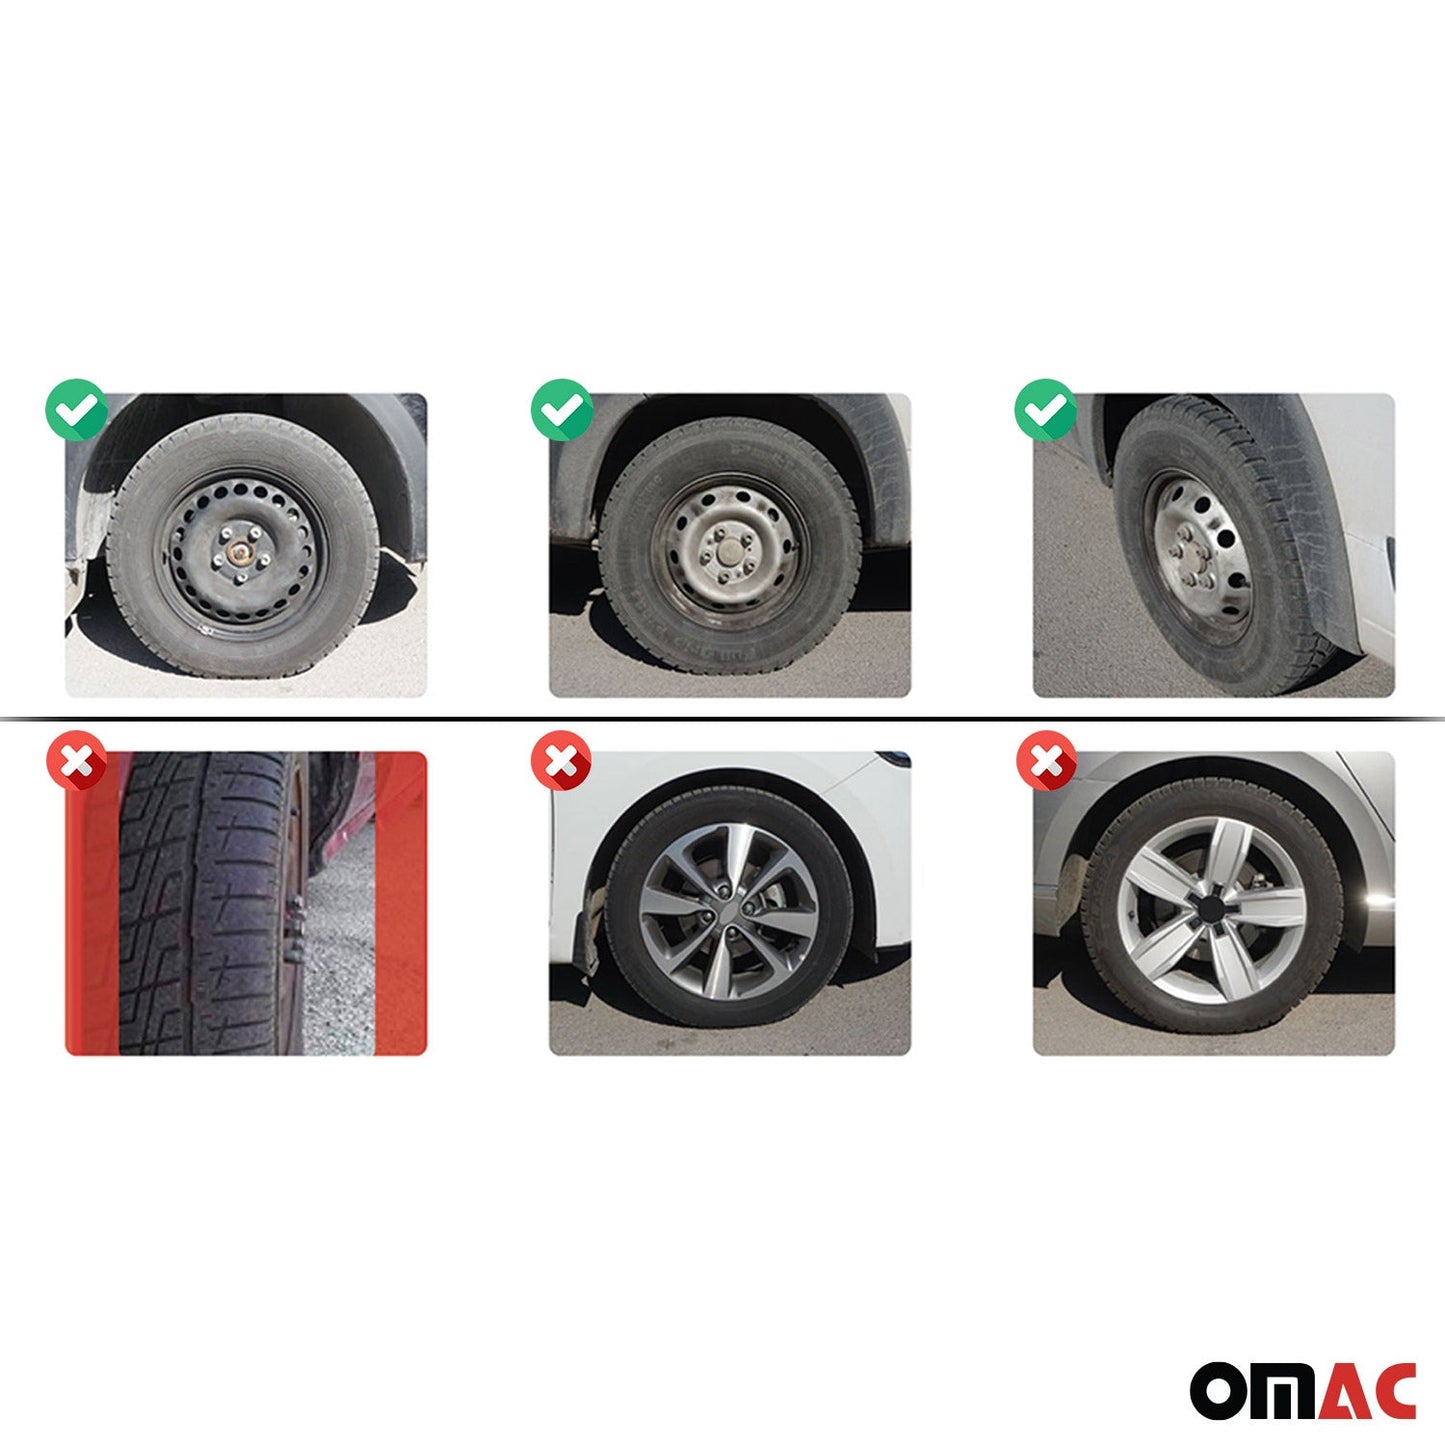 OMAC 14" Wheel Rim Cover fits Universal Guard Hub Caps Durable ABS Gray Yellow Matte 99FR241G14Y